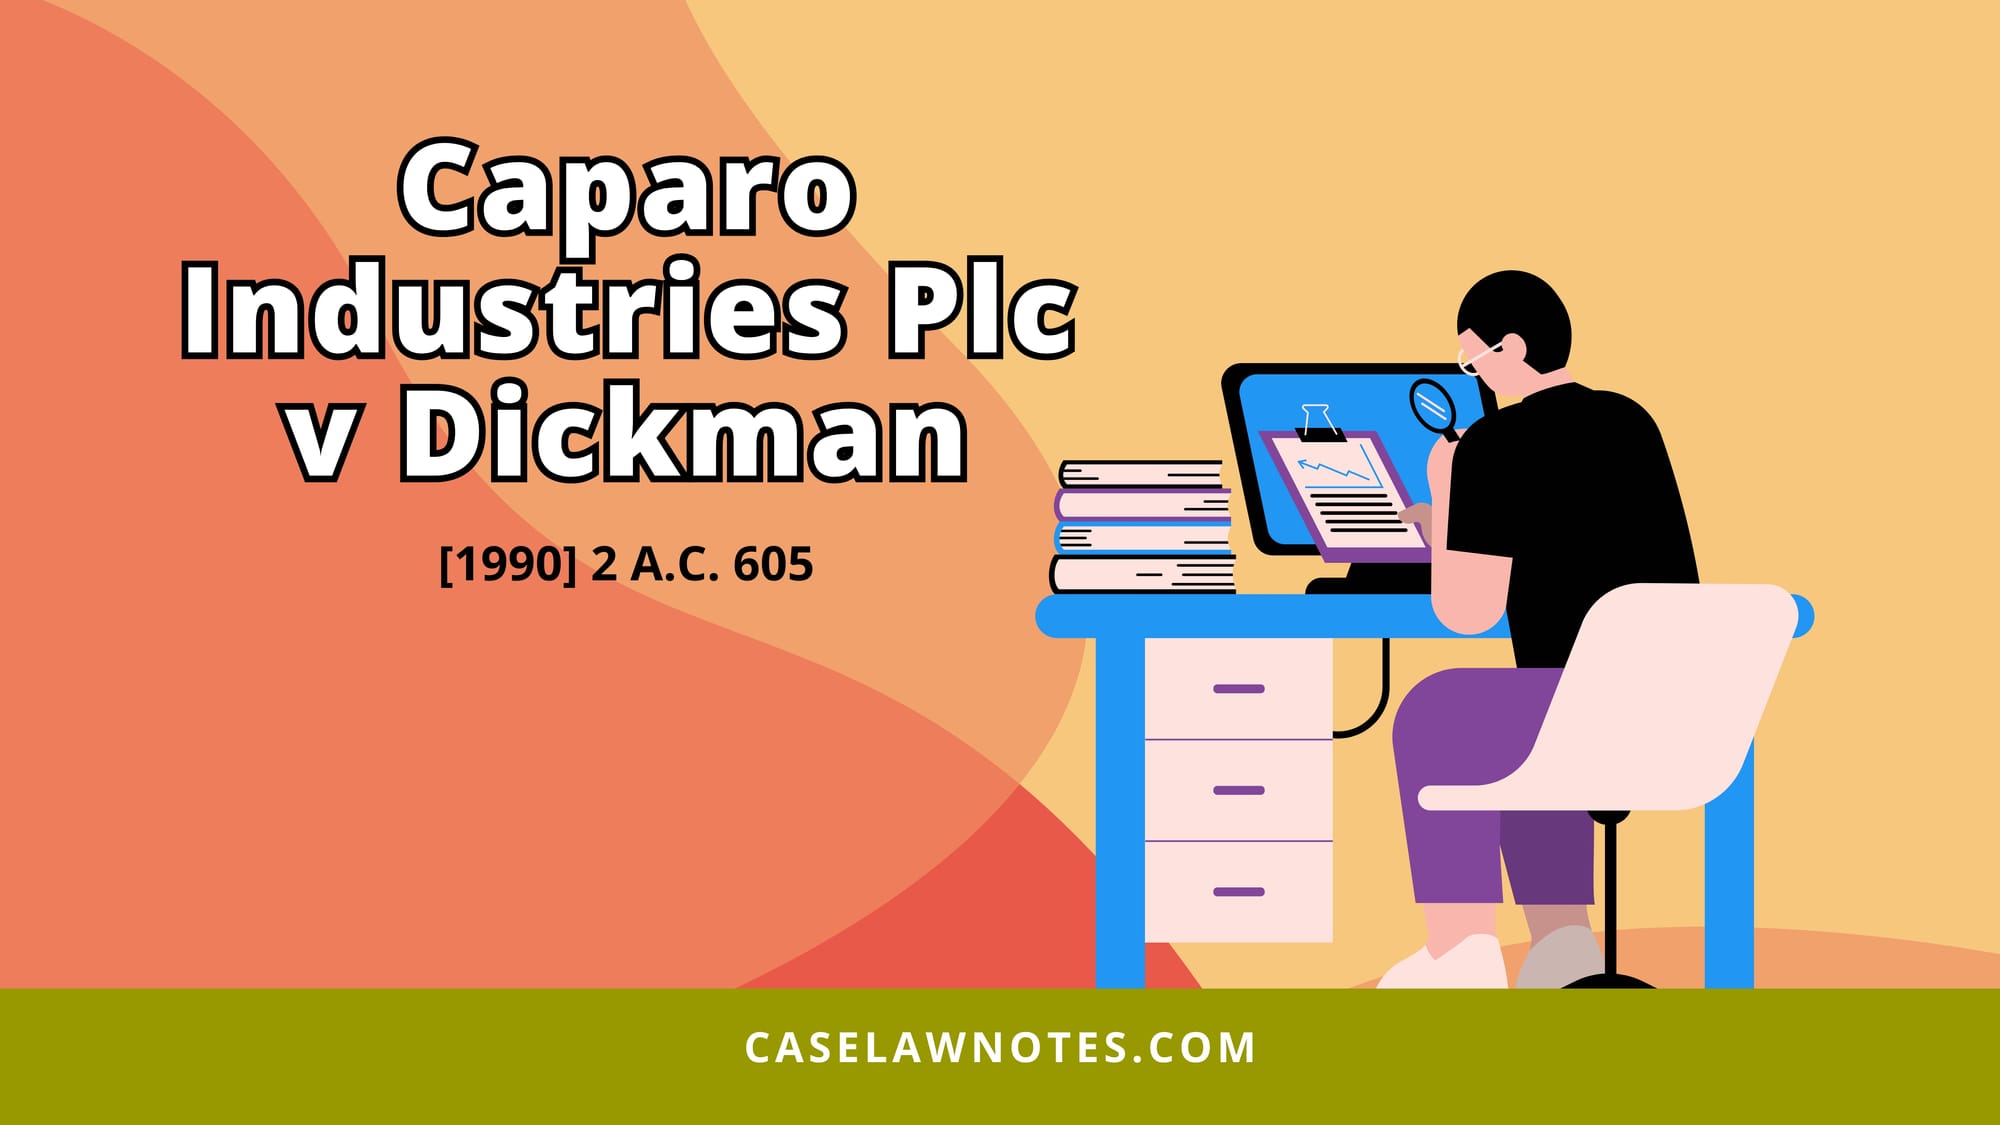 Caparo Industries Plc v Dickman - company - auditors - duty of care - shareholders 2